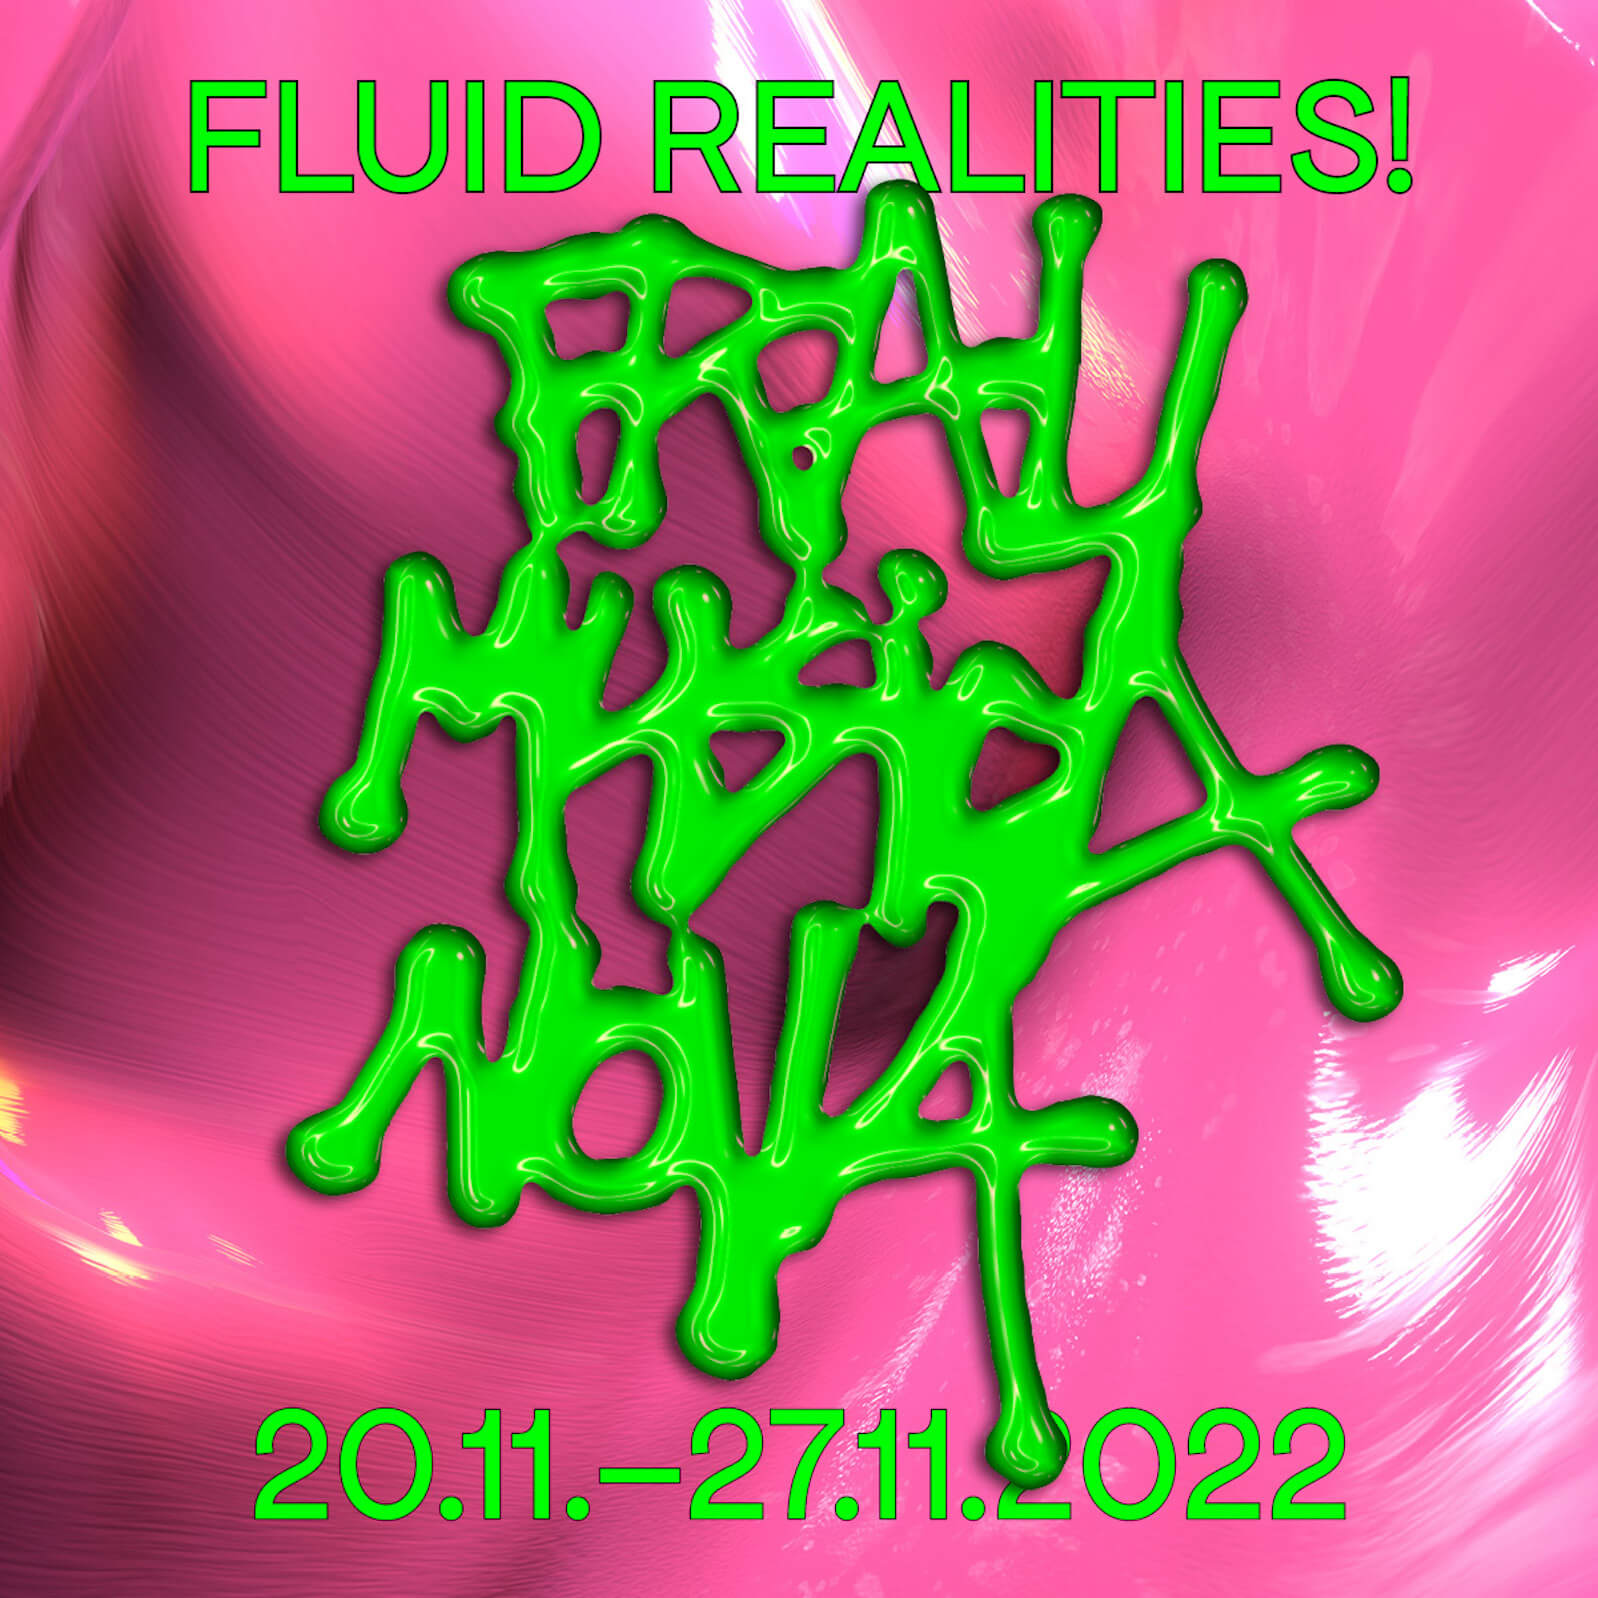 Frau Musica Nova: Fluid Realities Nov 20-27, green graffiti like writing on a pink gum-like background